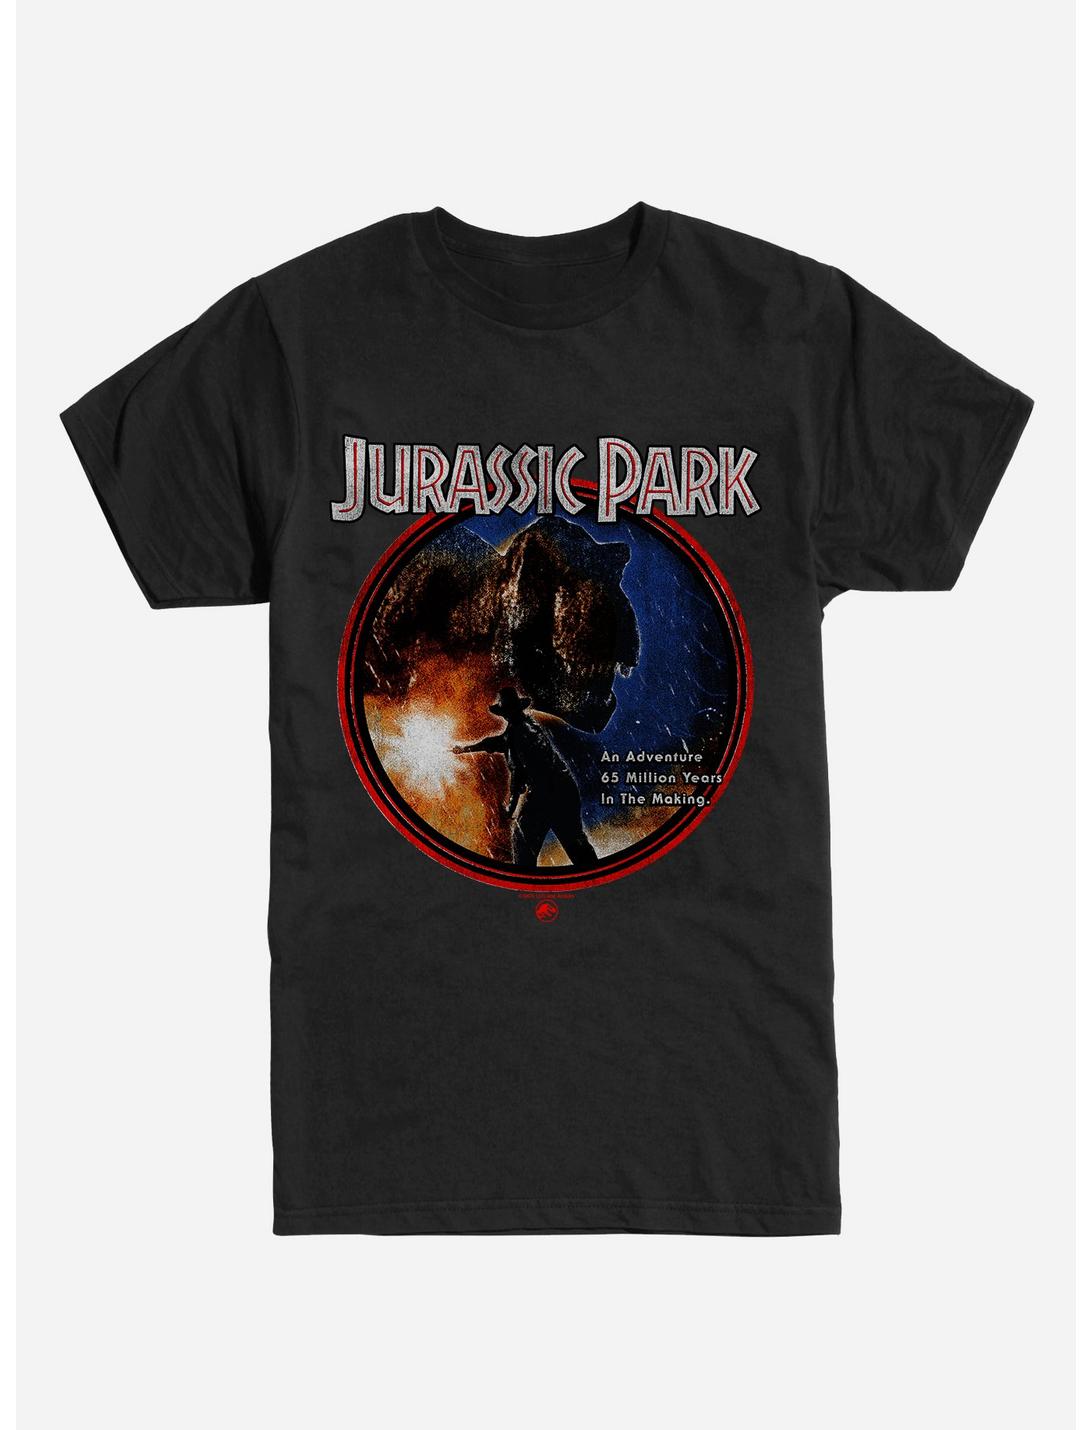 Jurassic Park Adventure 65 Million Years In The Making Black T-Shirt, , hi-res